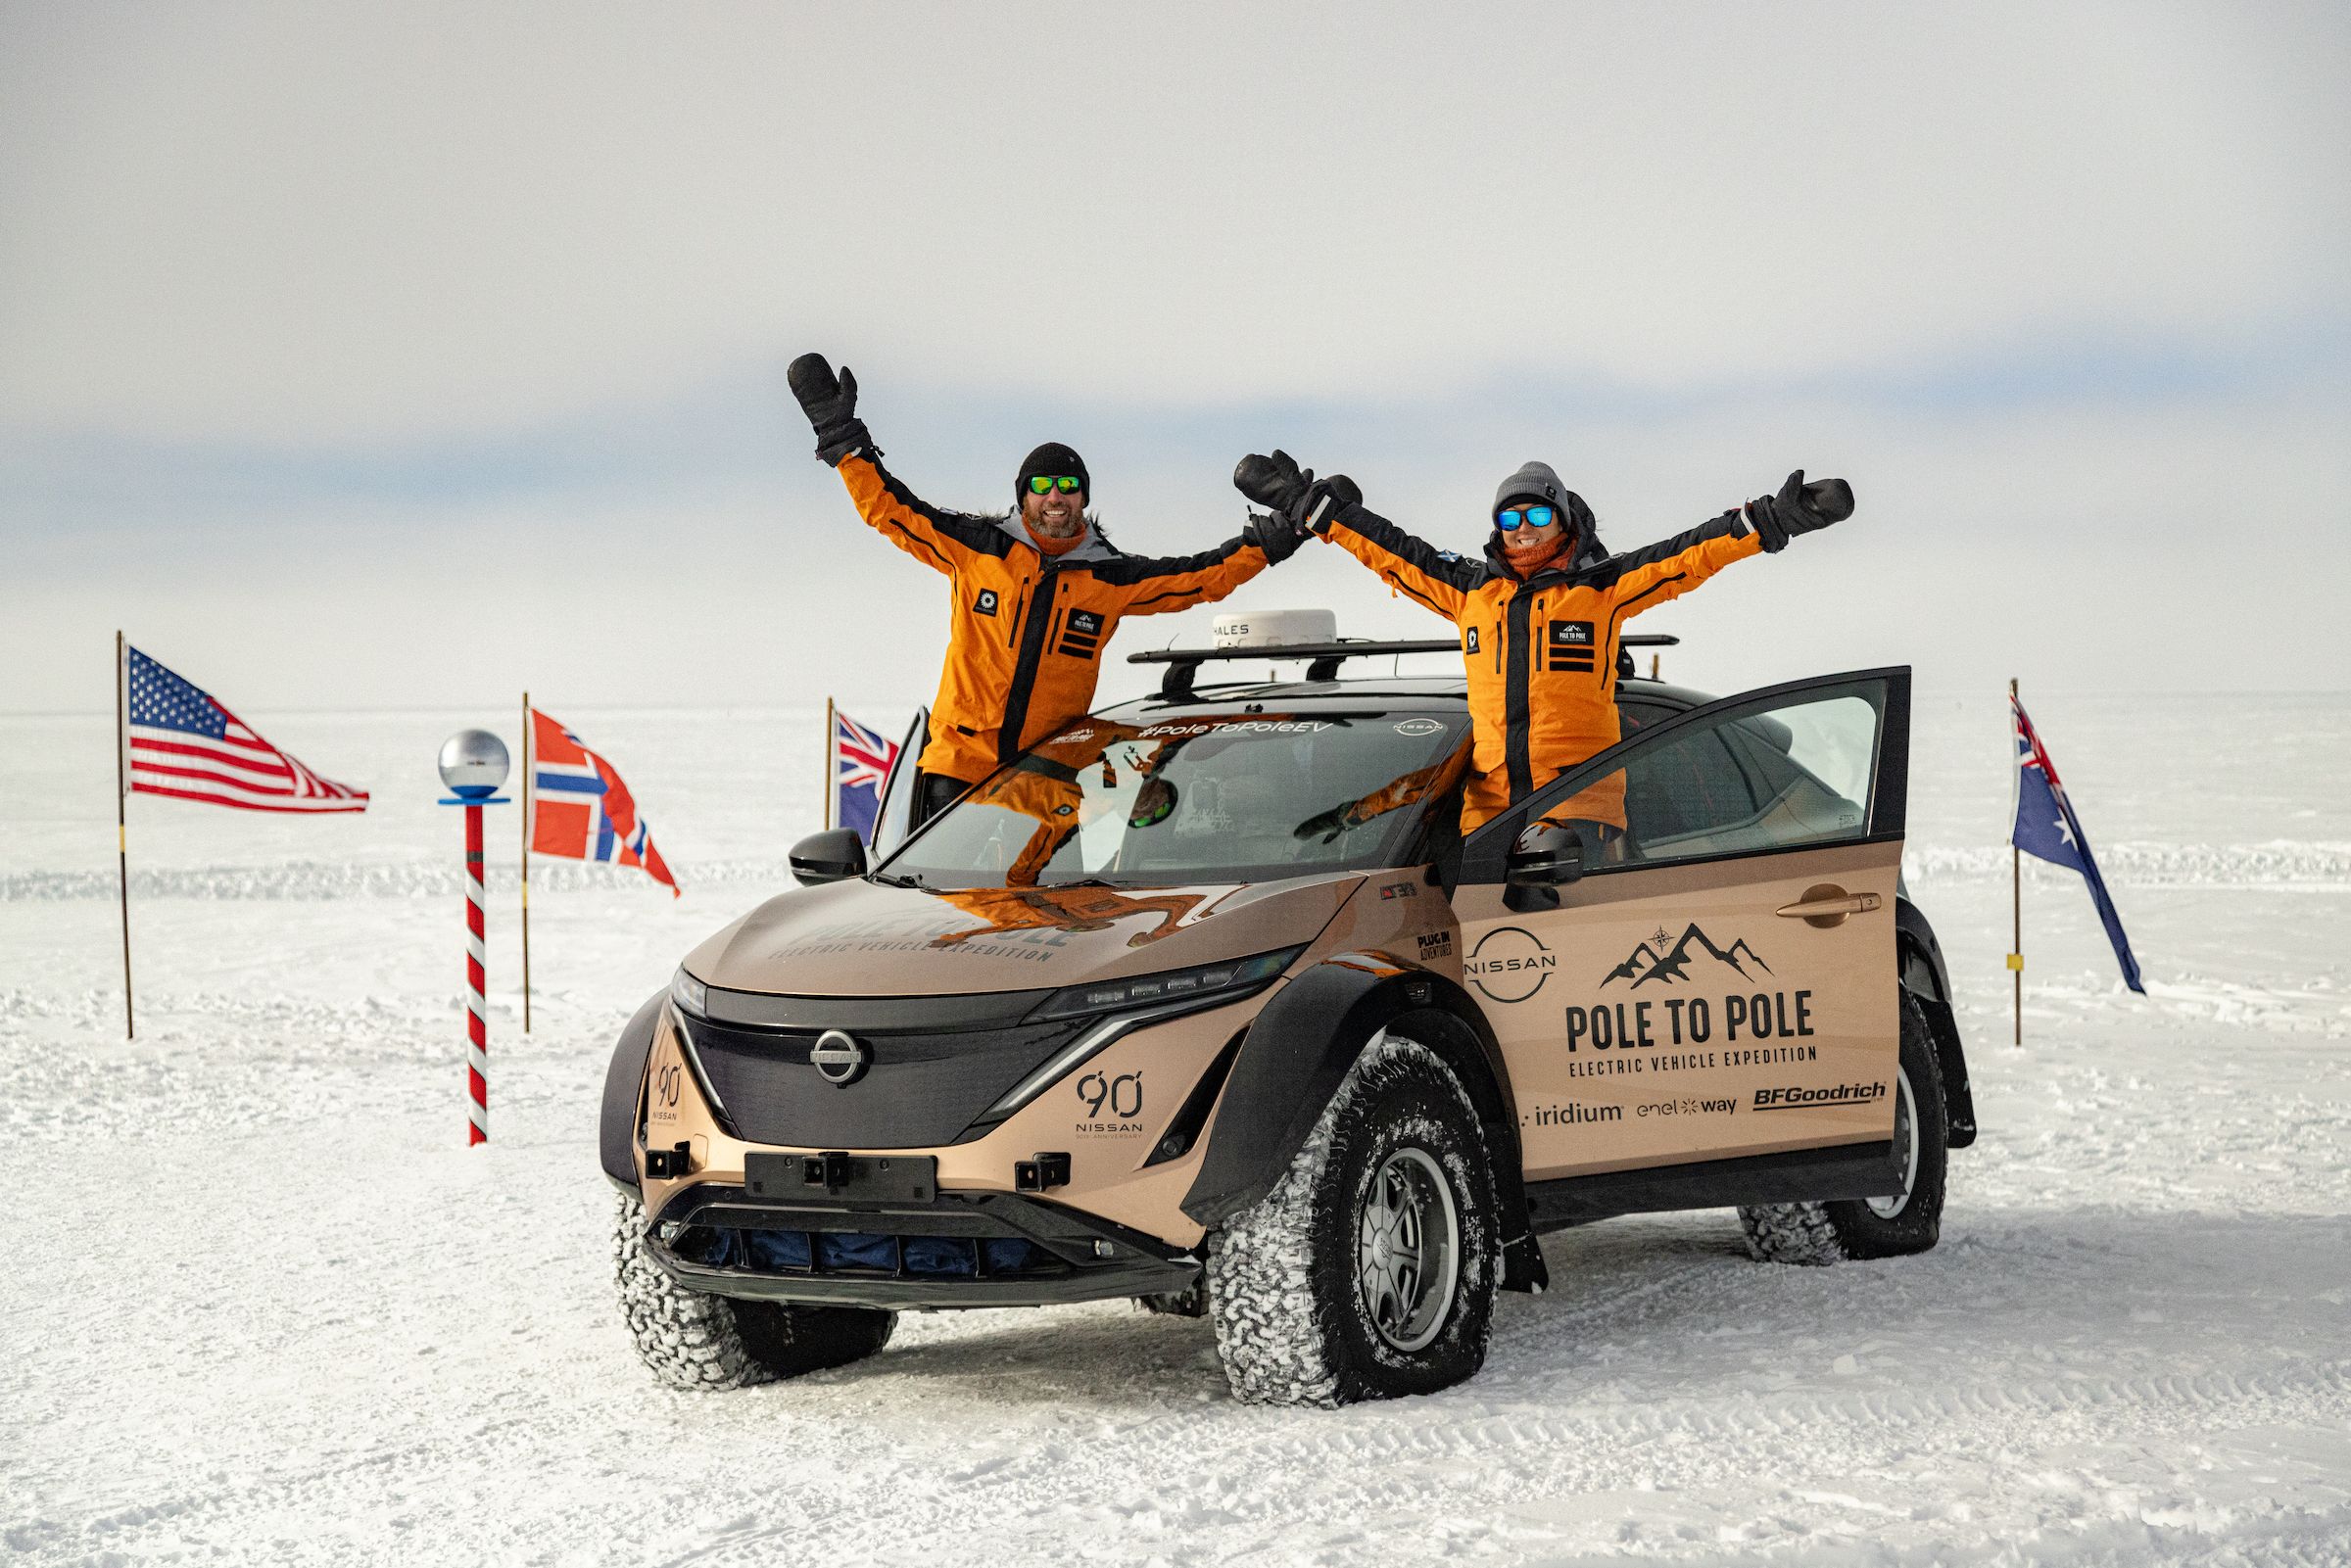 Bronze Nissan SUV at North Pole